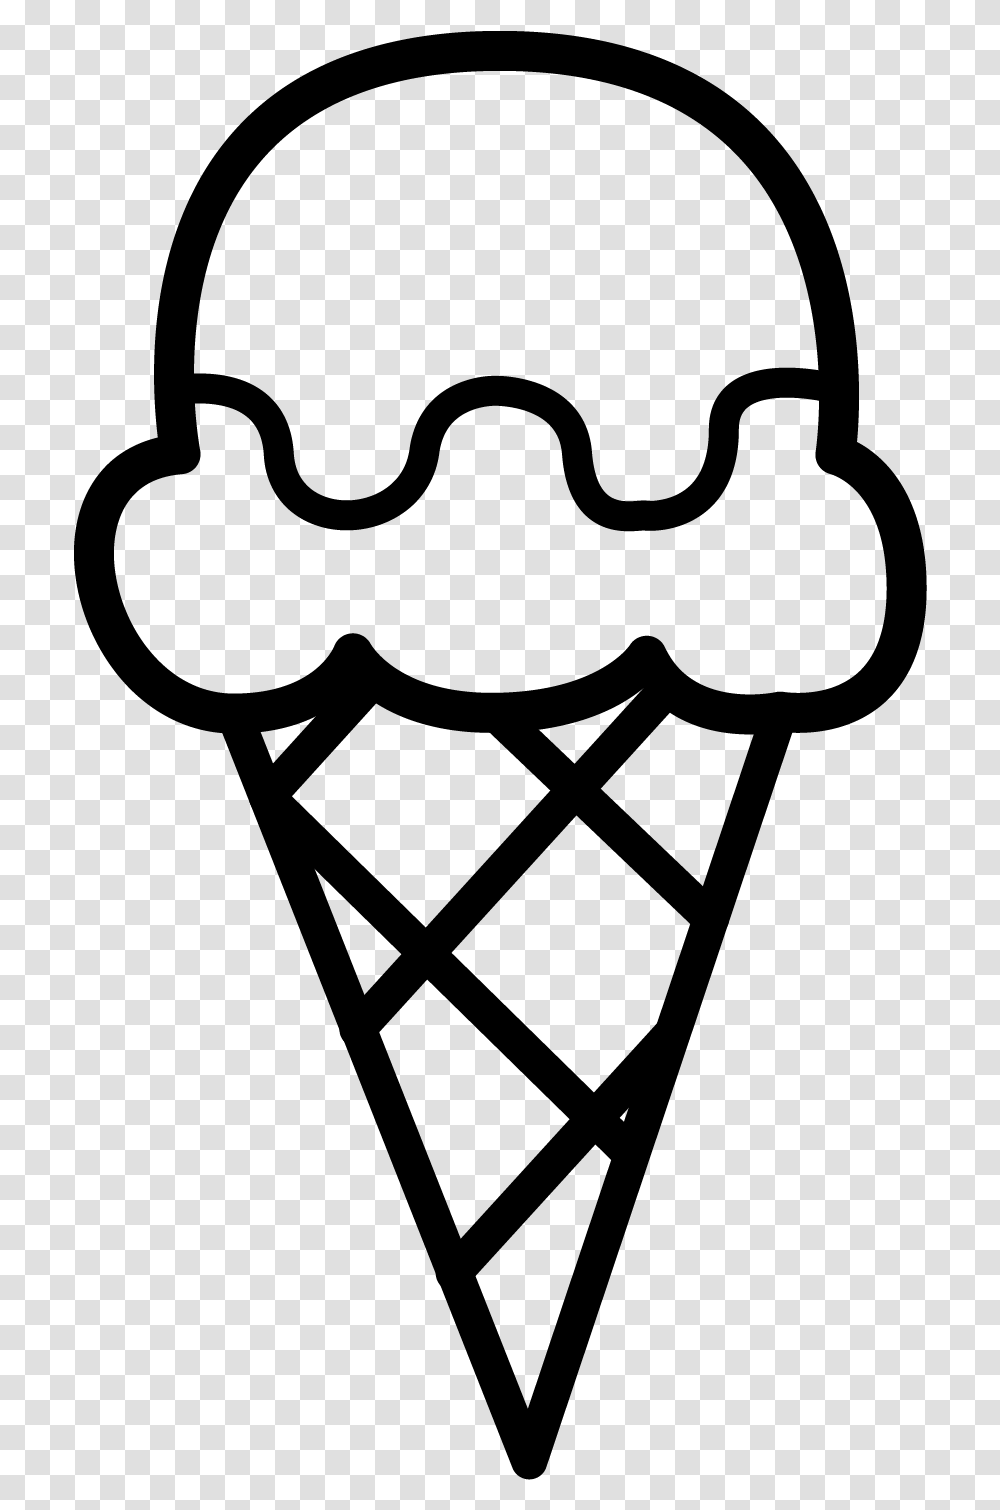 Ice Cream Cone Clipart Download Ice Cream Clipart Black And White, Stencil, Silhouette, Triangle Transparent Png